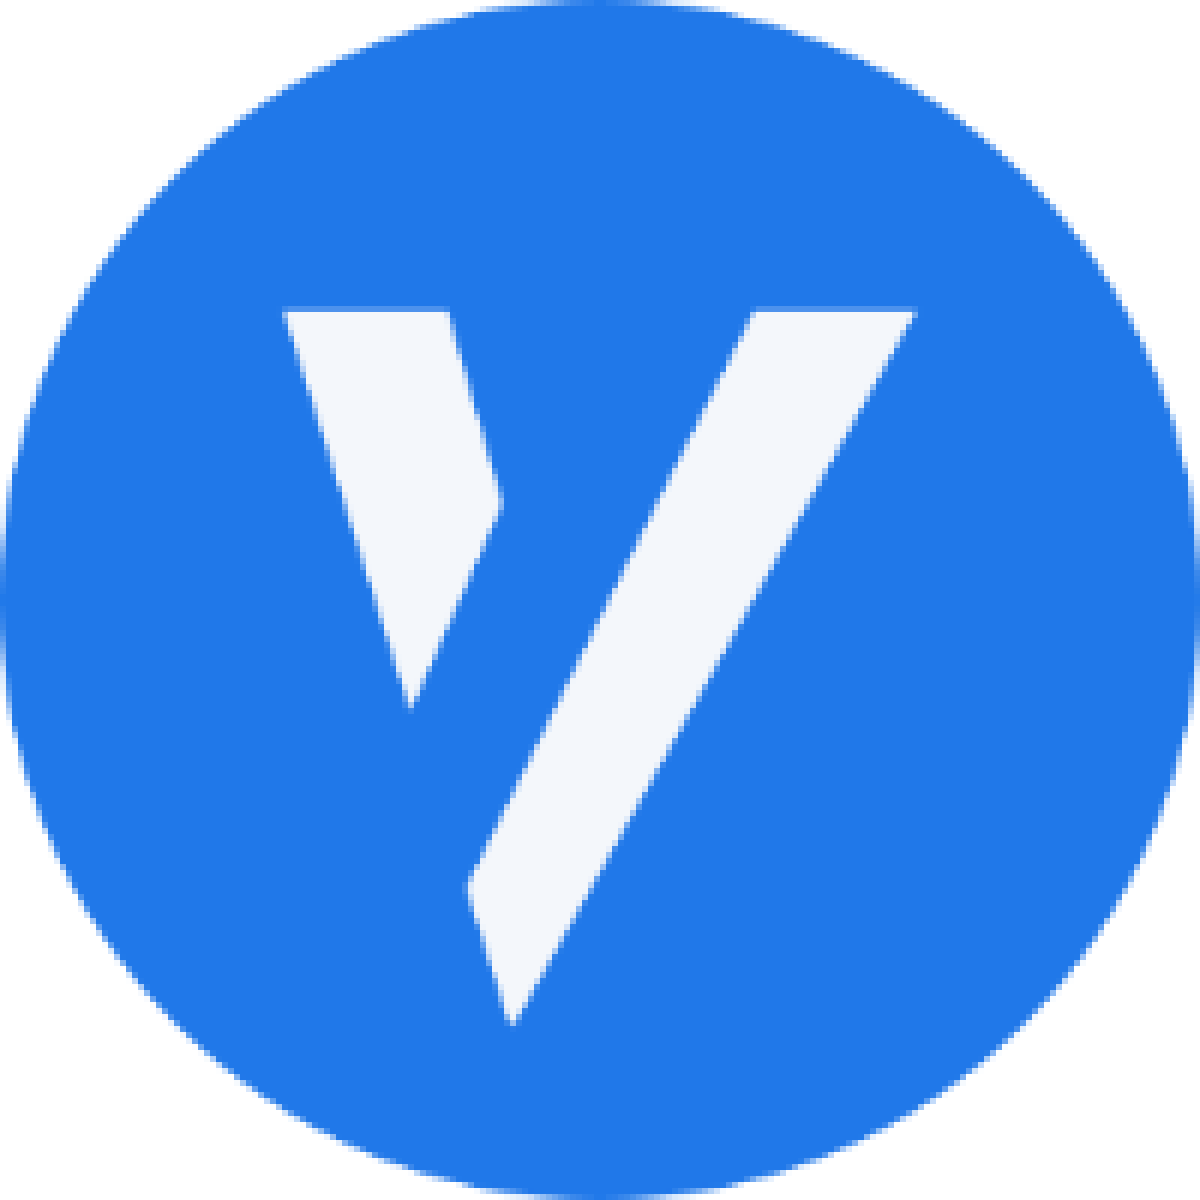 Vestige logo vector eps free download – Artofit